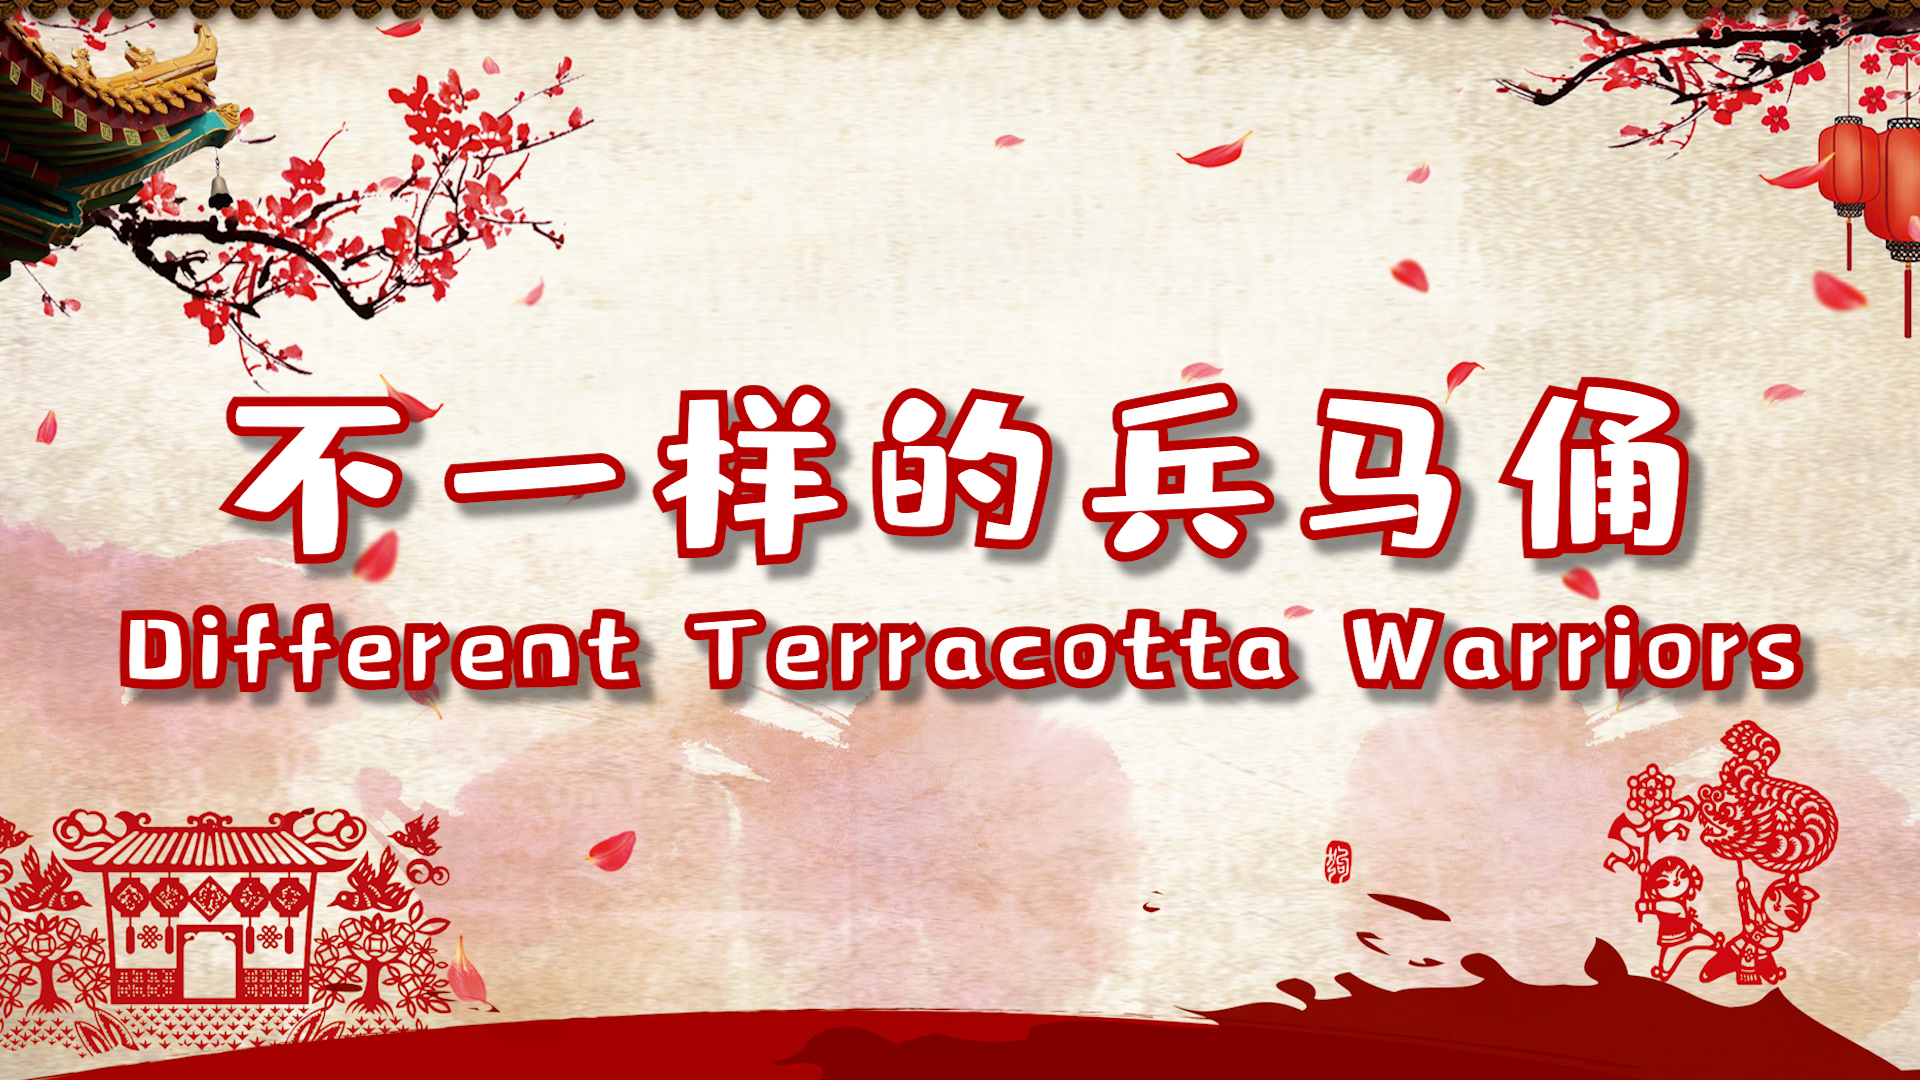 Different Terracotta Warriors